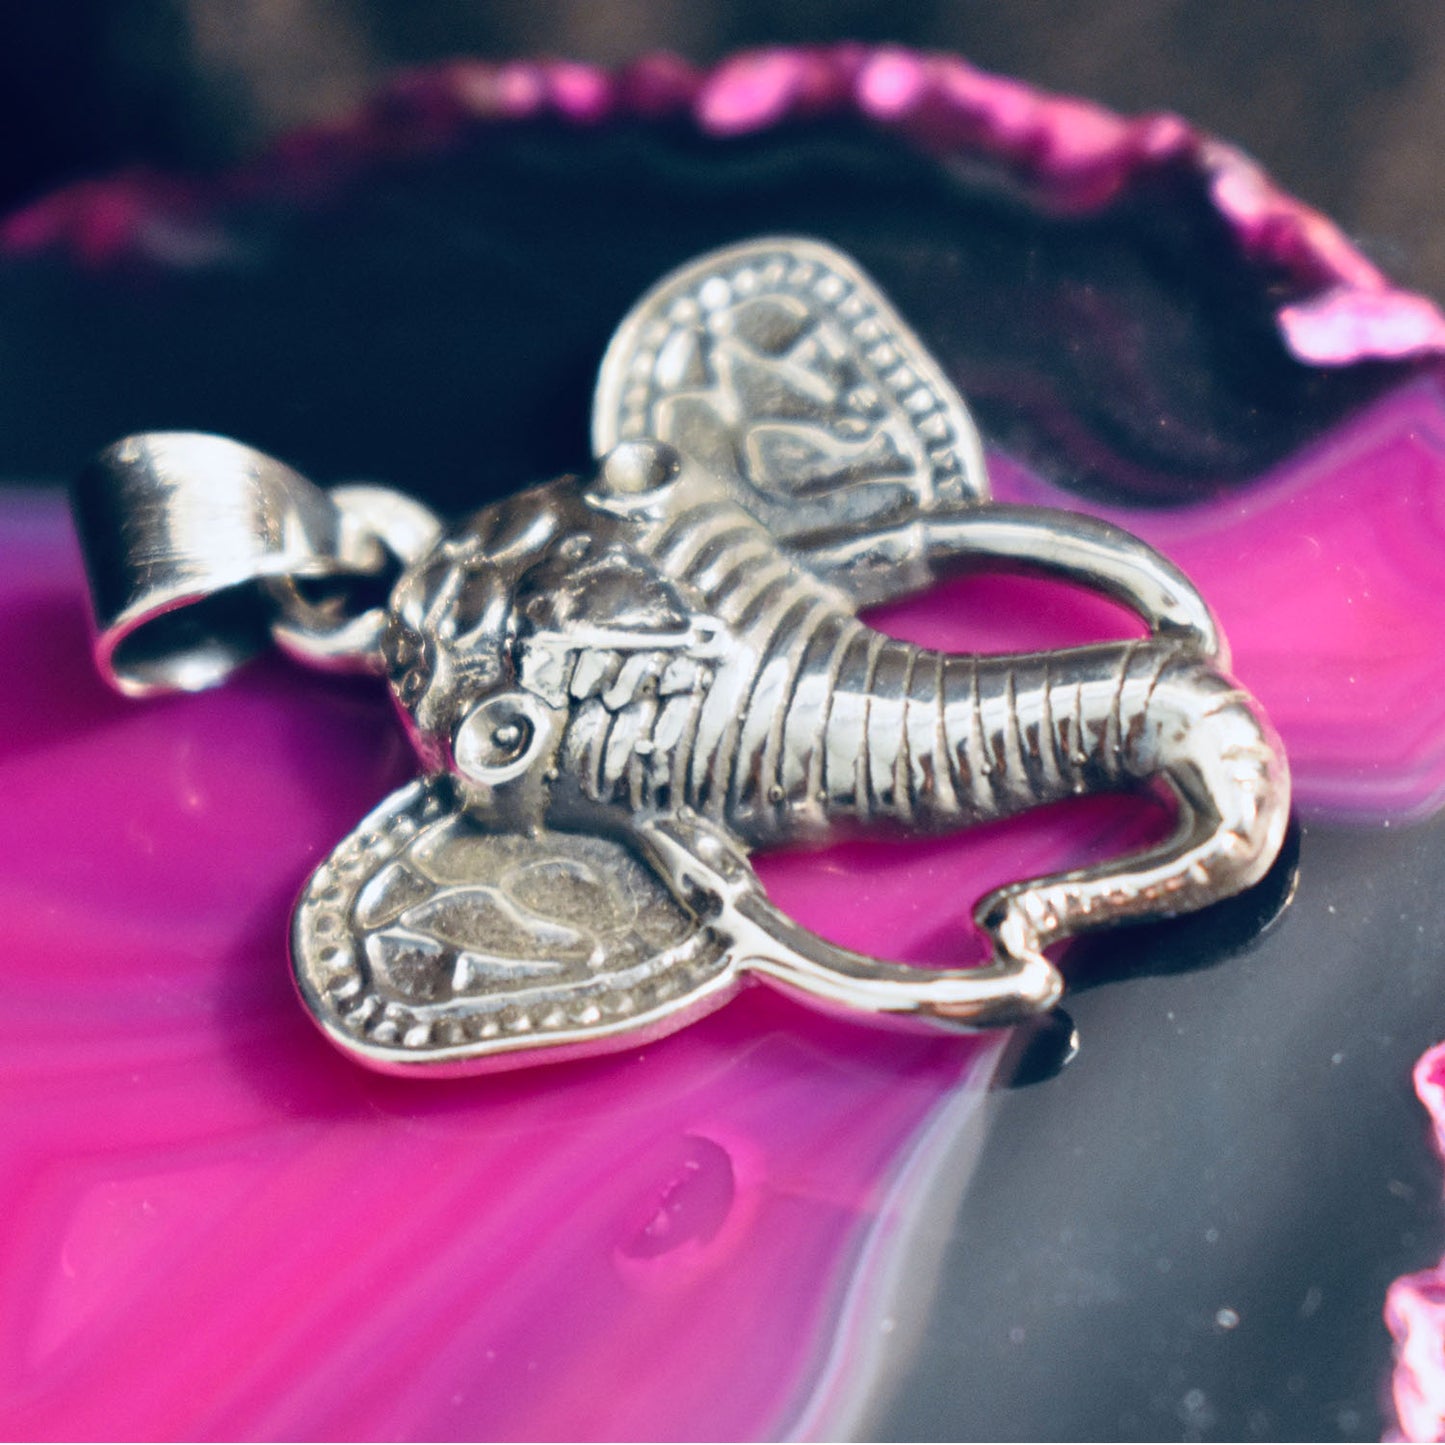 Ganesha Handicrafts Indian elephant Head Pendant, Pendant, Head Pendant, Elephant Pendant, Indian Pendant, Indian Elephant Pendant, Elephant Head Pendant, Silver Pendant